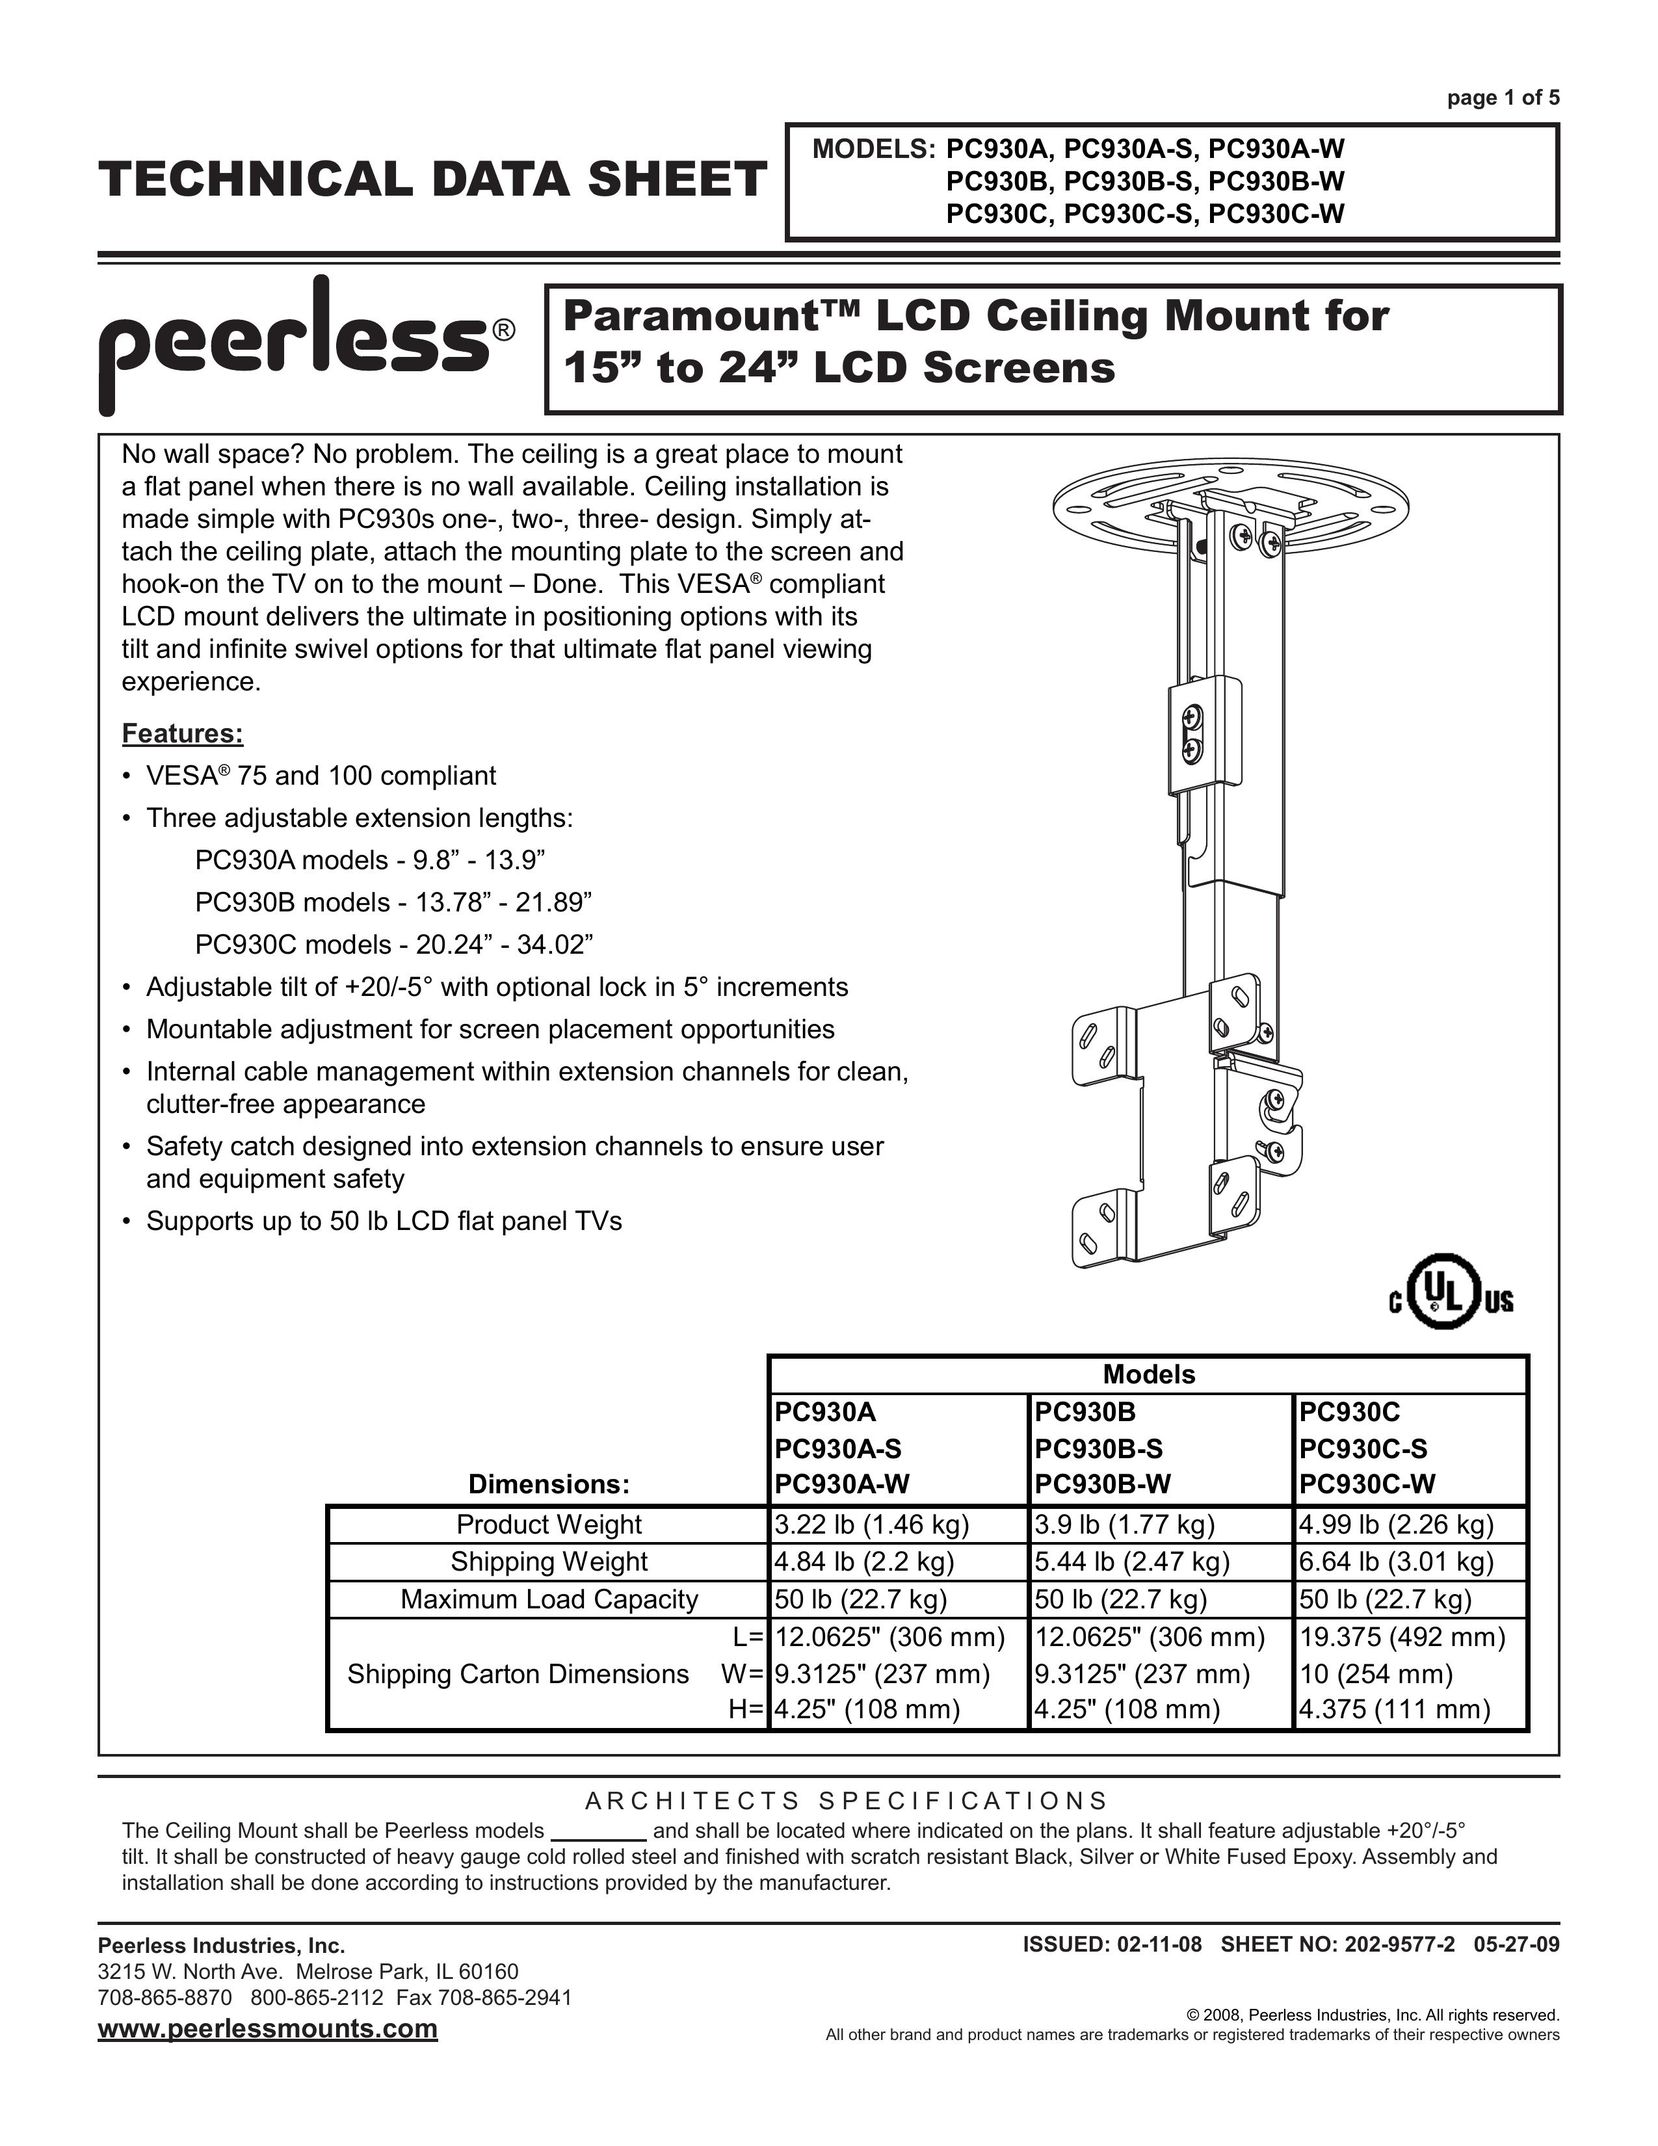 Peerless Industries PC930C-W TV Mount User Manual